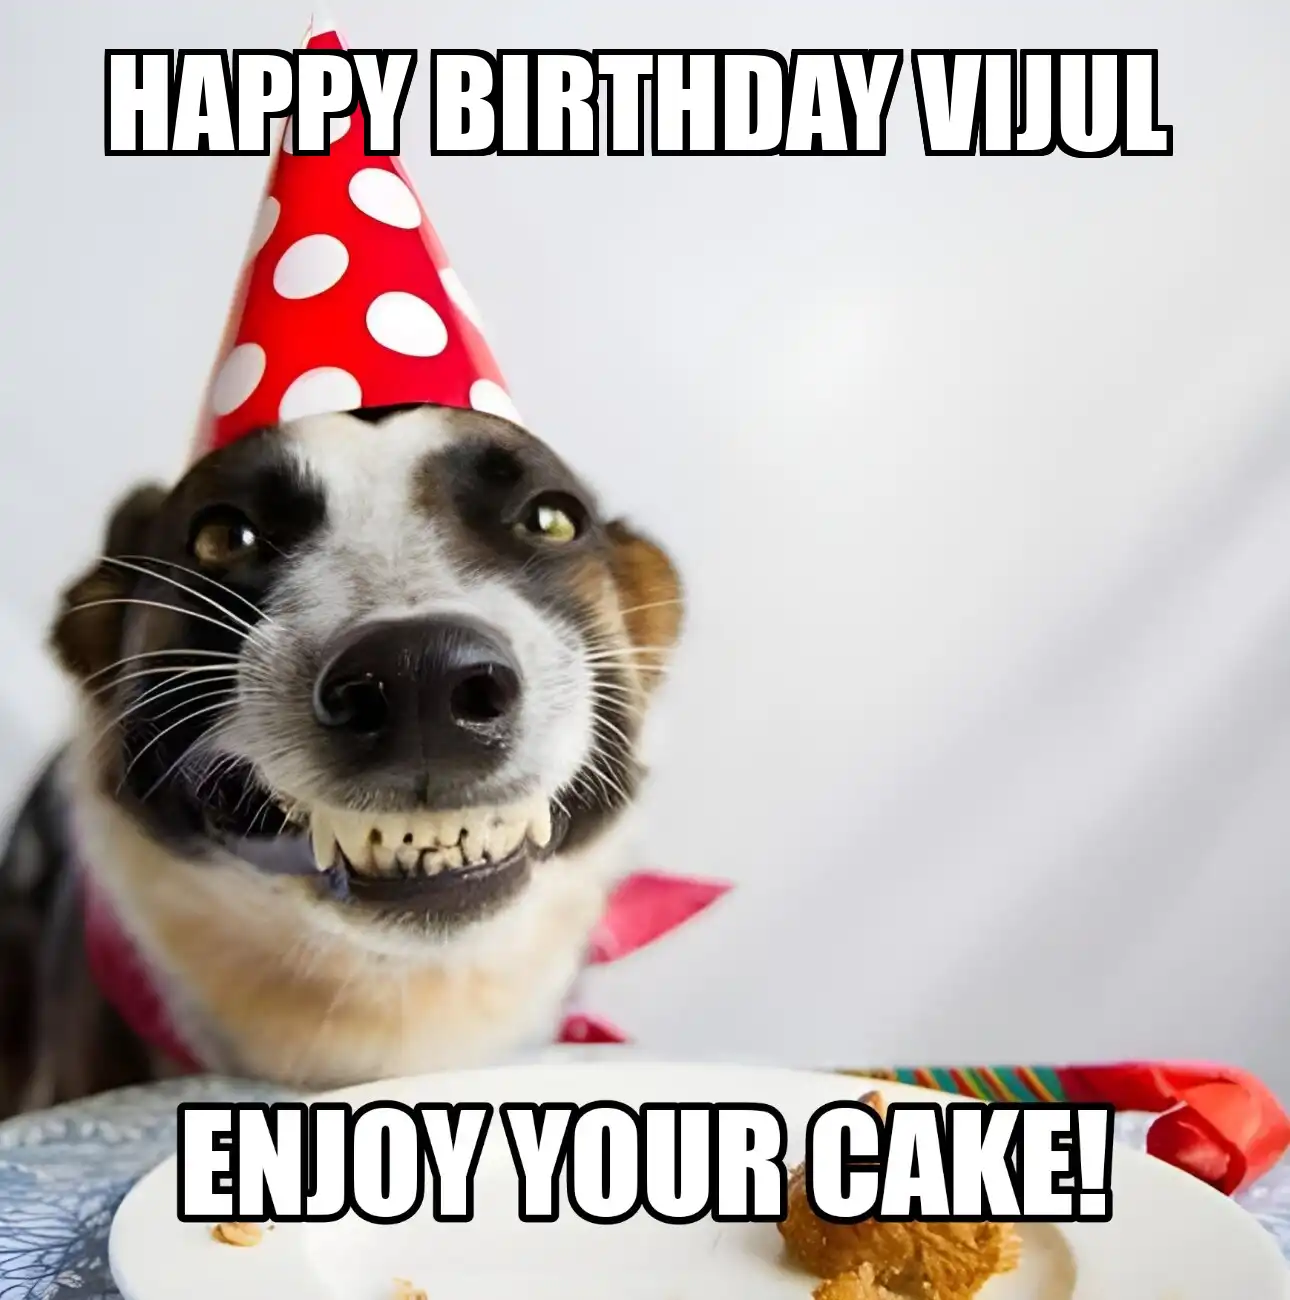 Happy Birthday Vijul Enjoy Your Cake Dog Meme